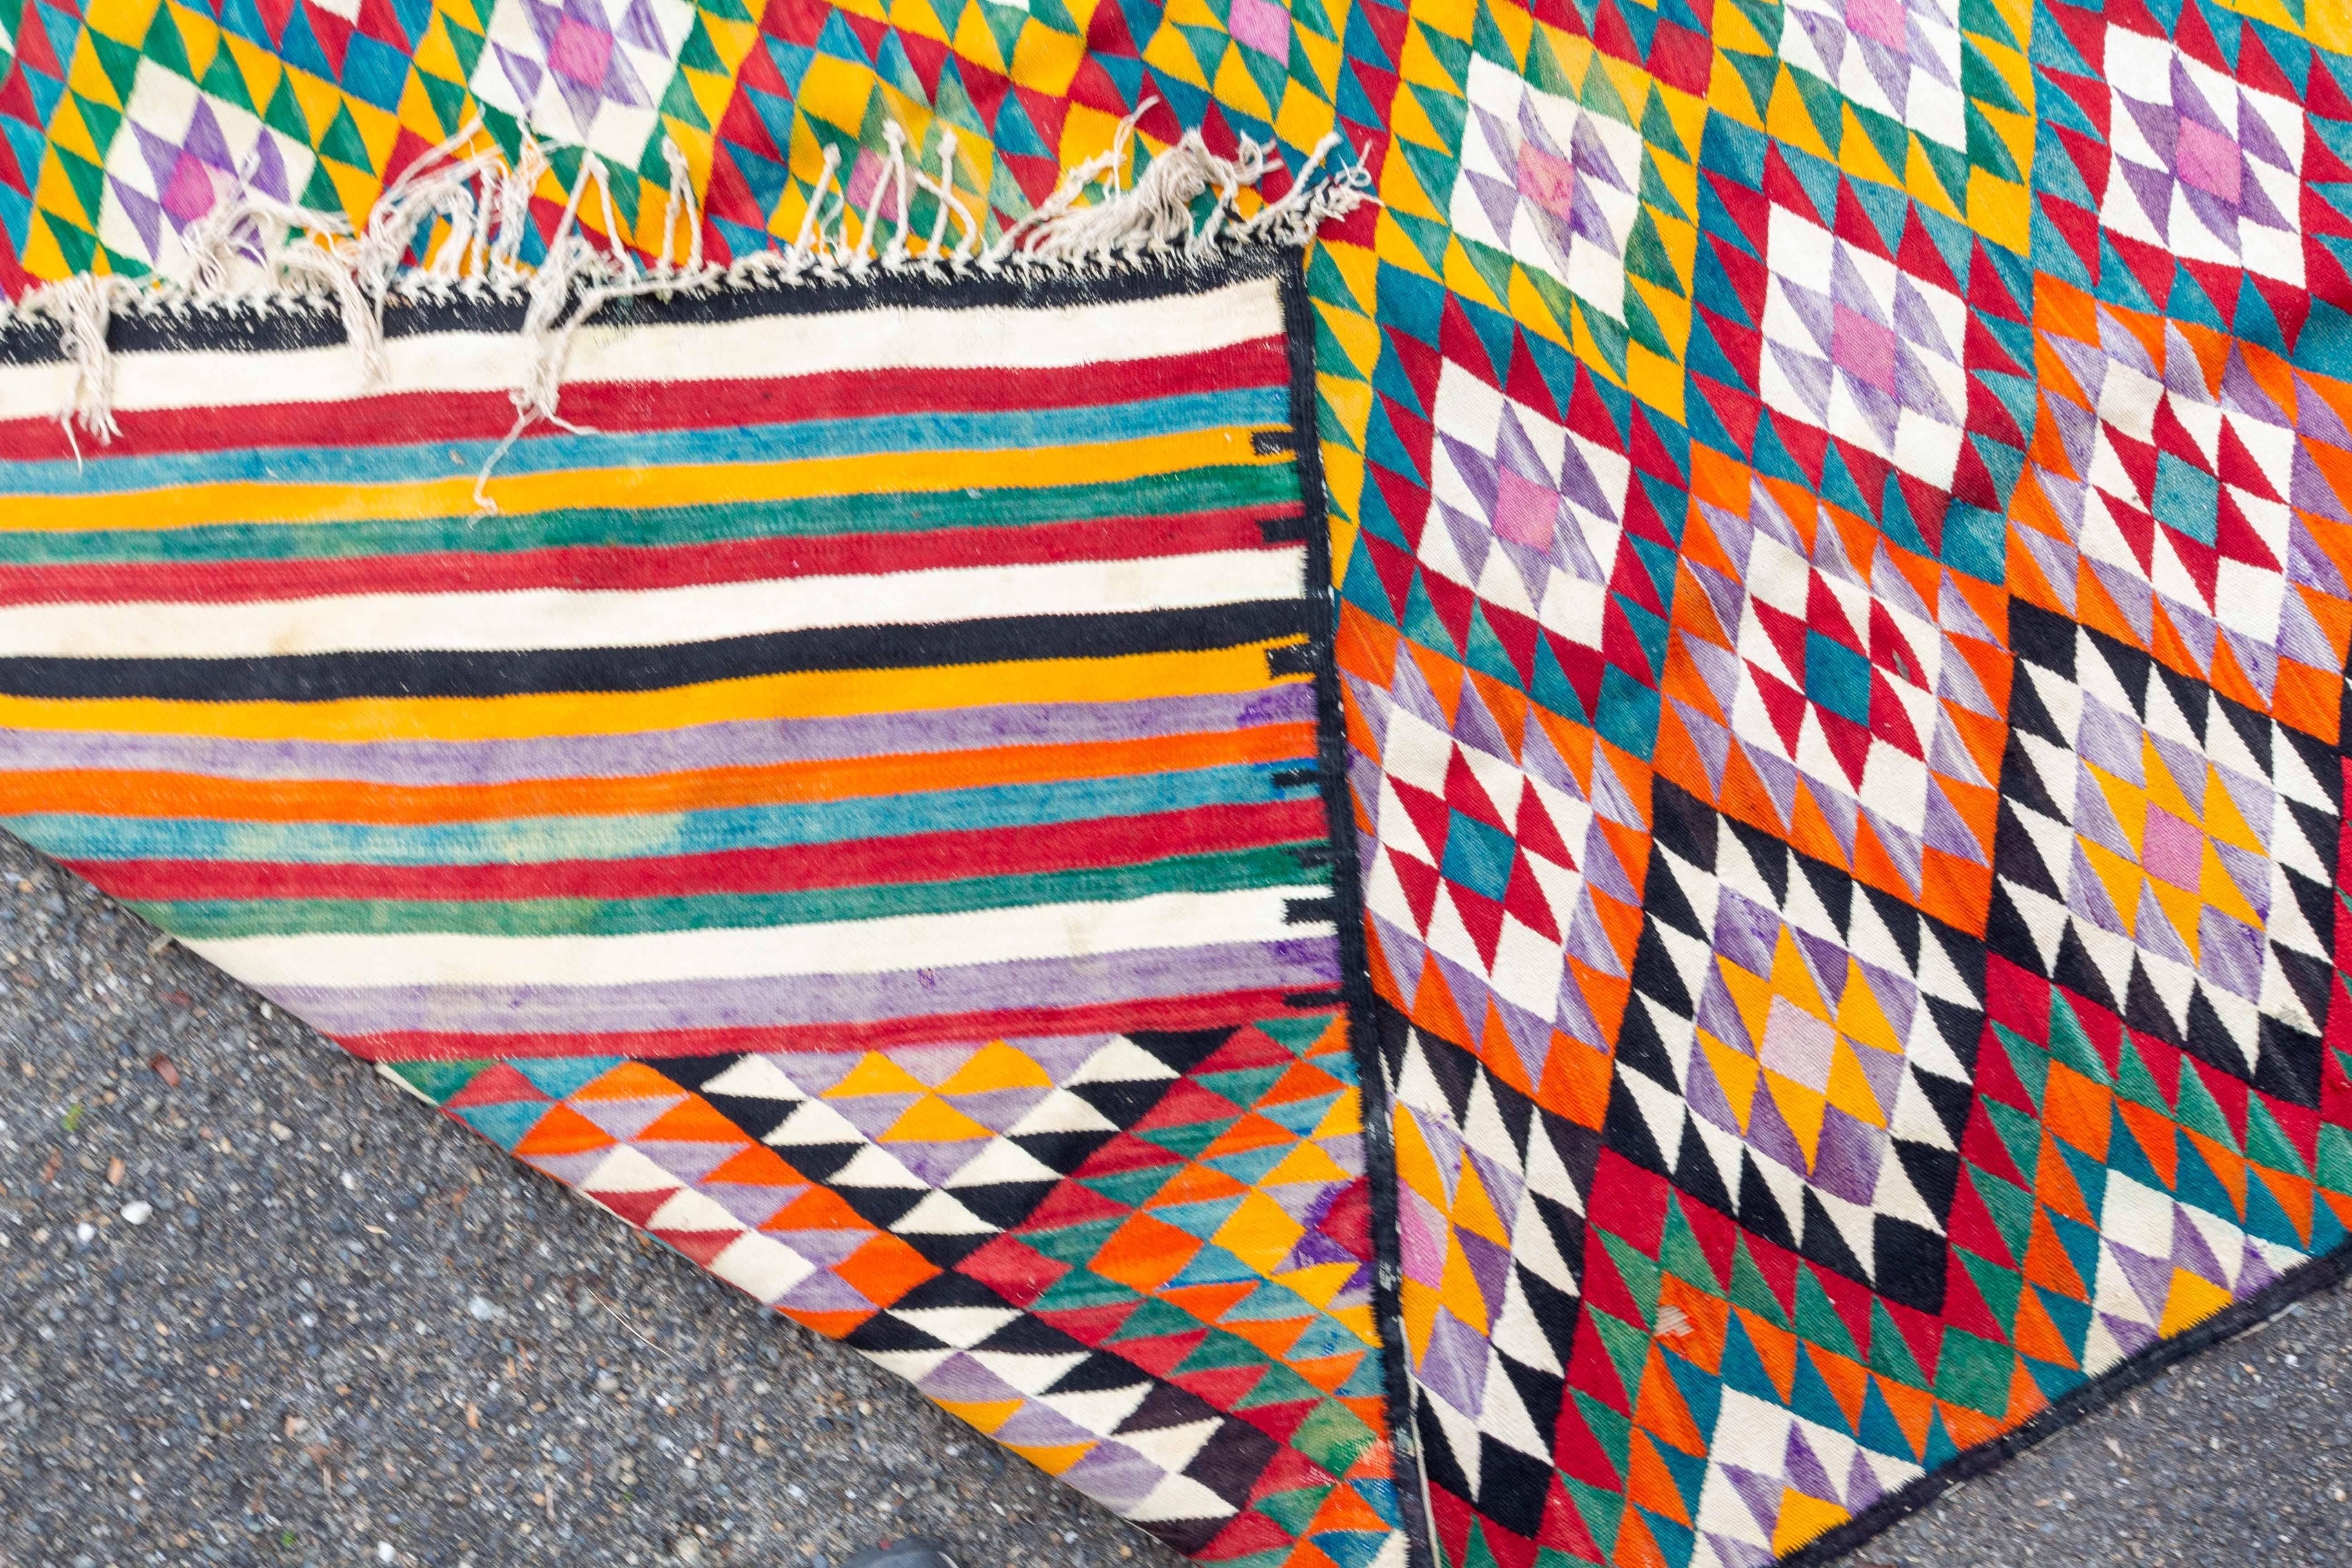 Afgan Kilim Carpet Multicolor and Geometric Patterns, circa 1950 For Sale 2